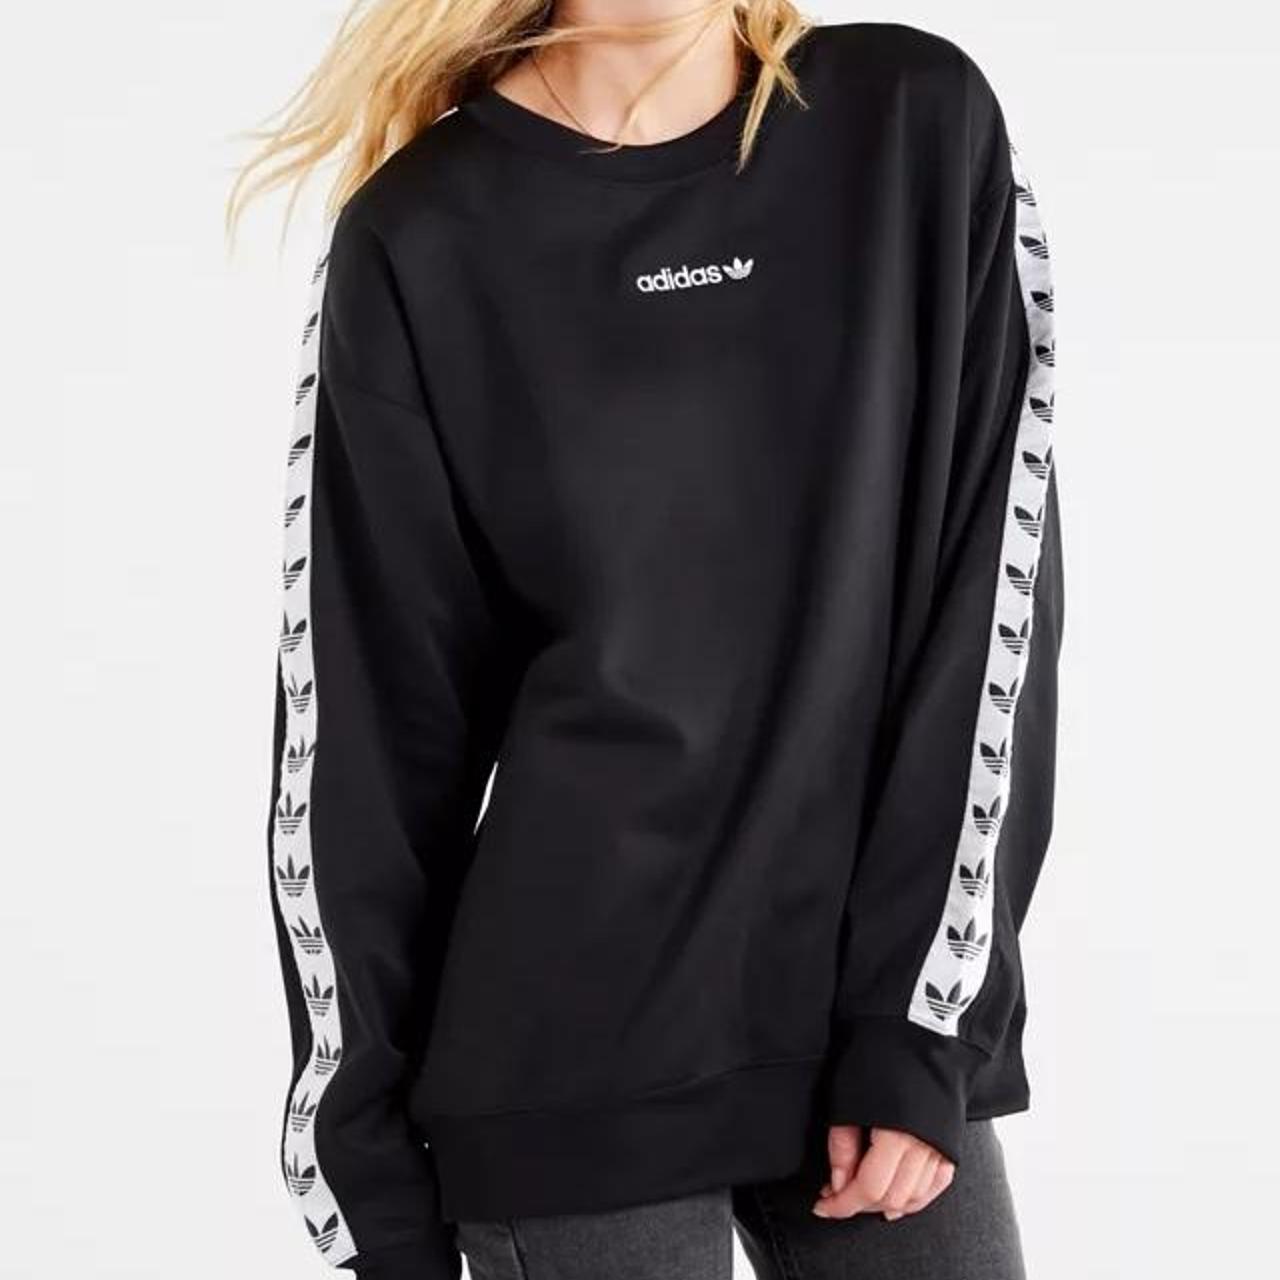 Adidas Originals Taped Crewneck Sweatshirt Size:... - Depop